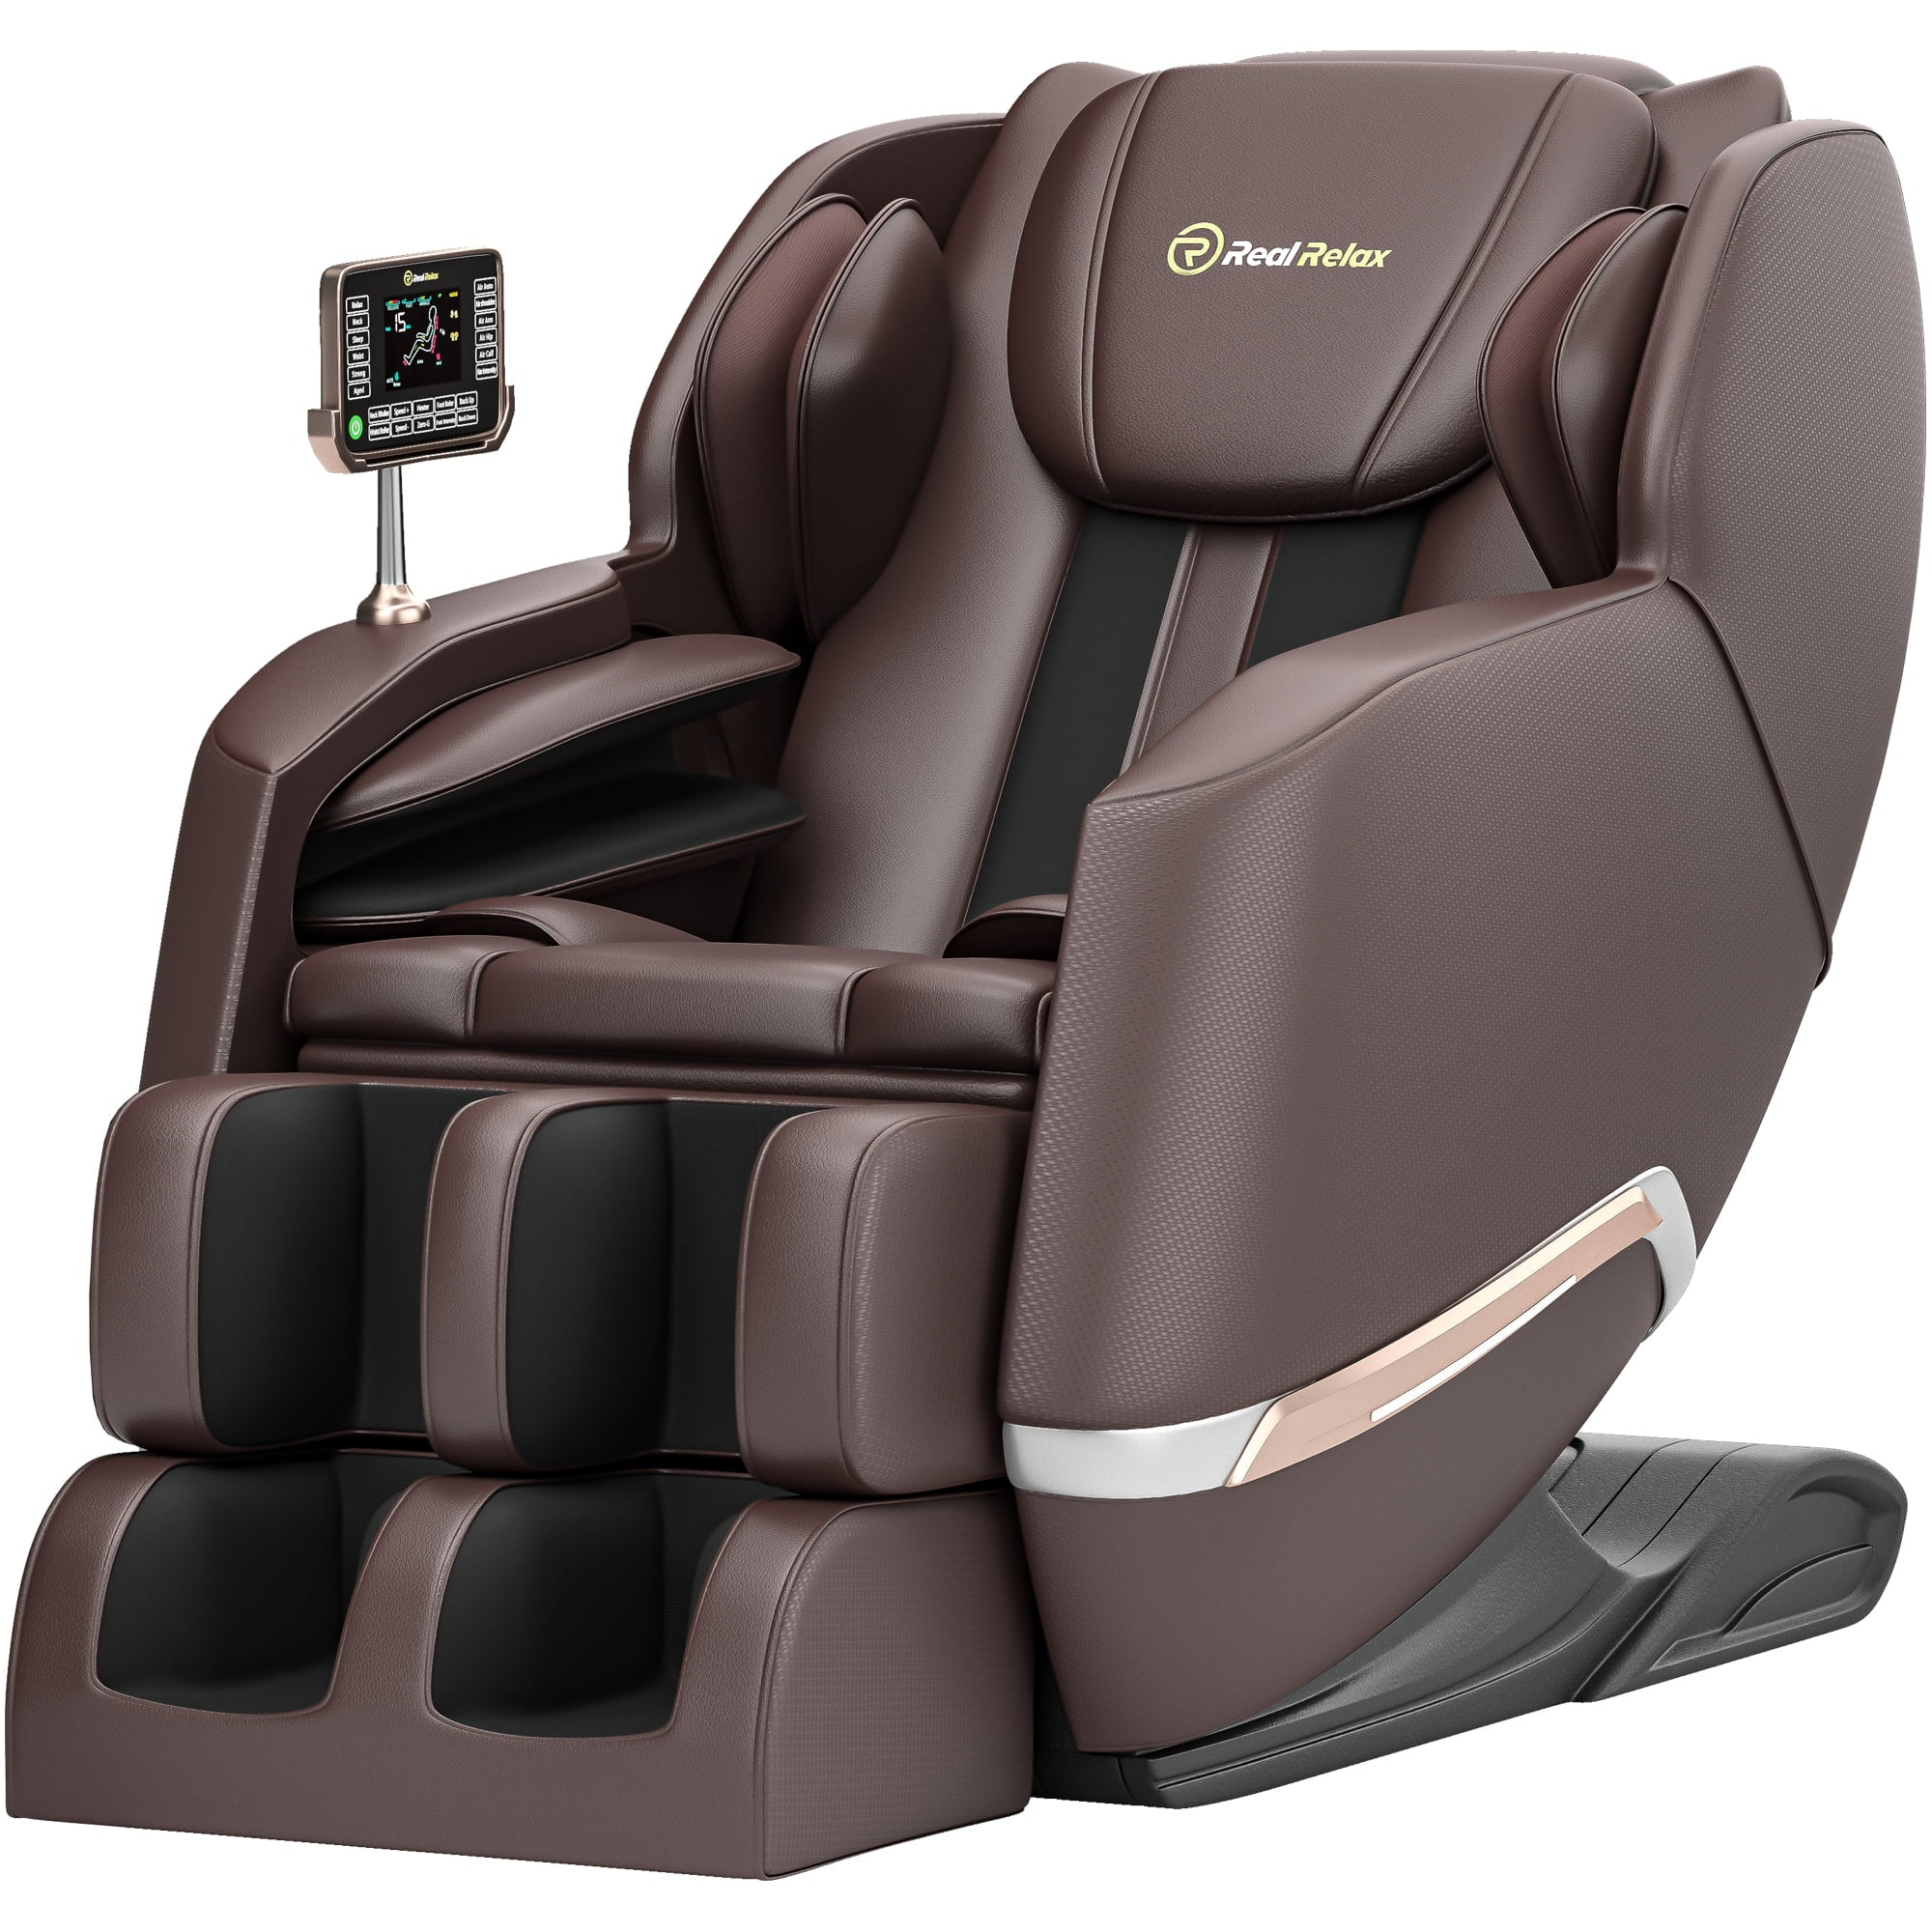 Full Body Zero Gravity Electric Massage Chair + $32.44 Walmart Cash